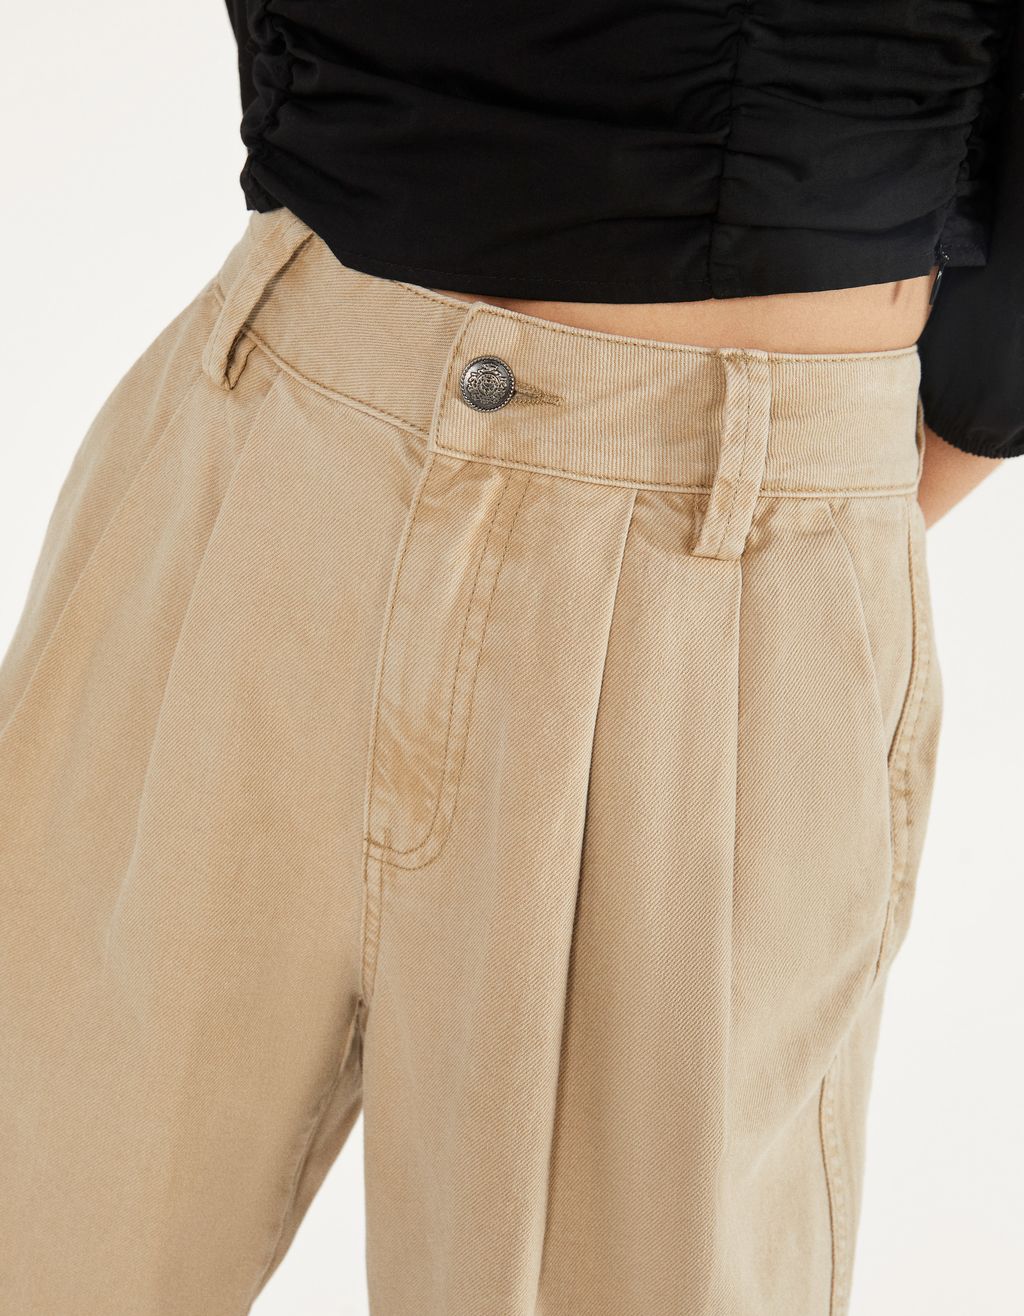 https://www.bershka.com/gb/women/collection/trousers/slouchy-trousers ...